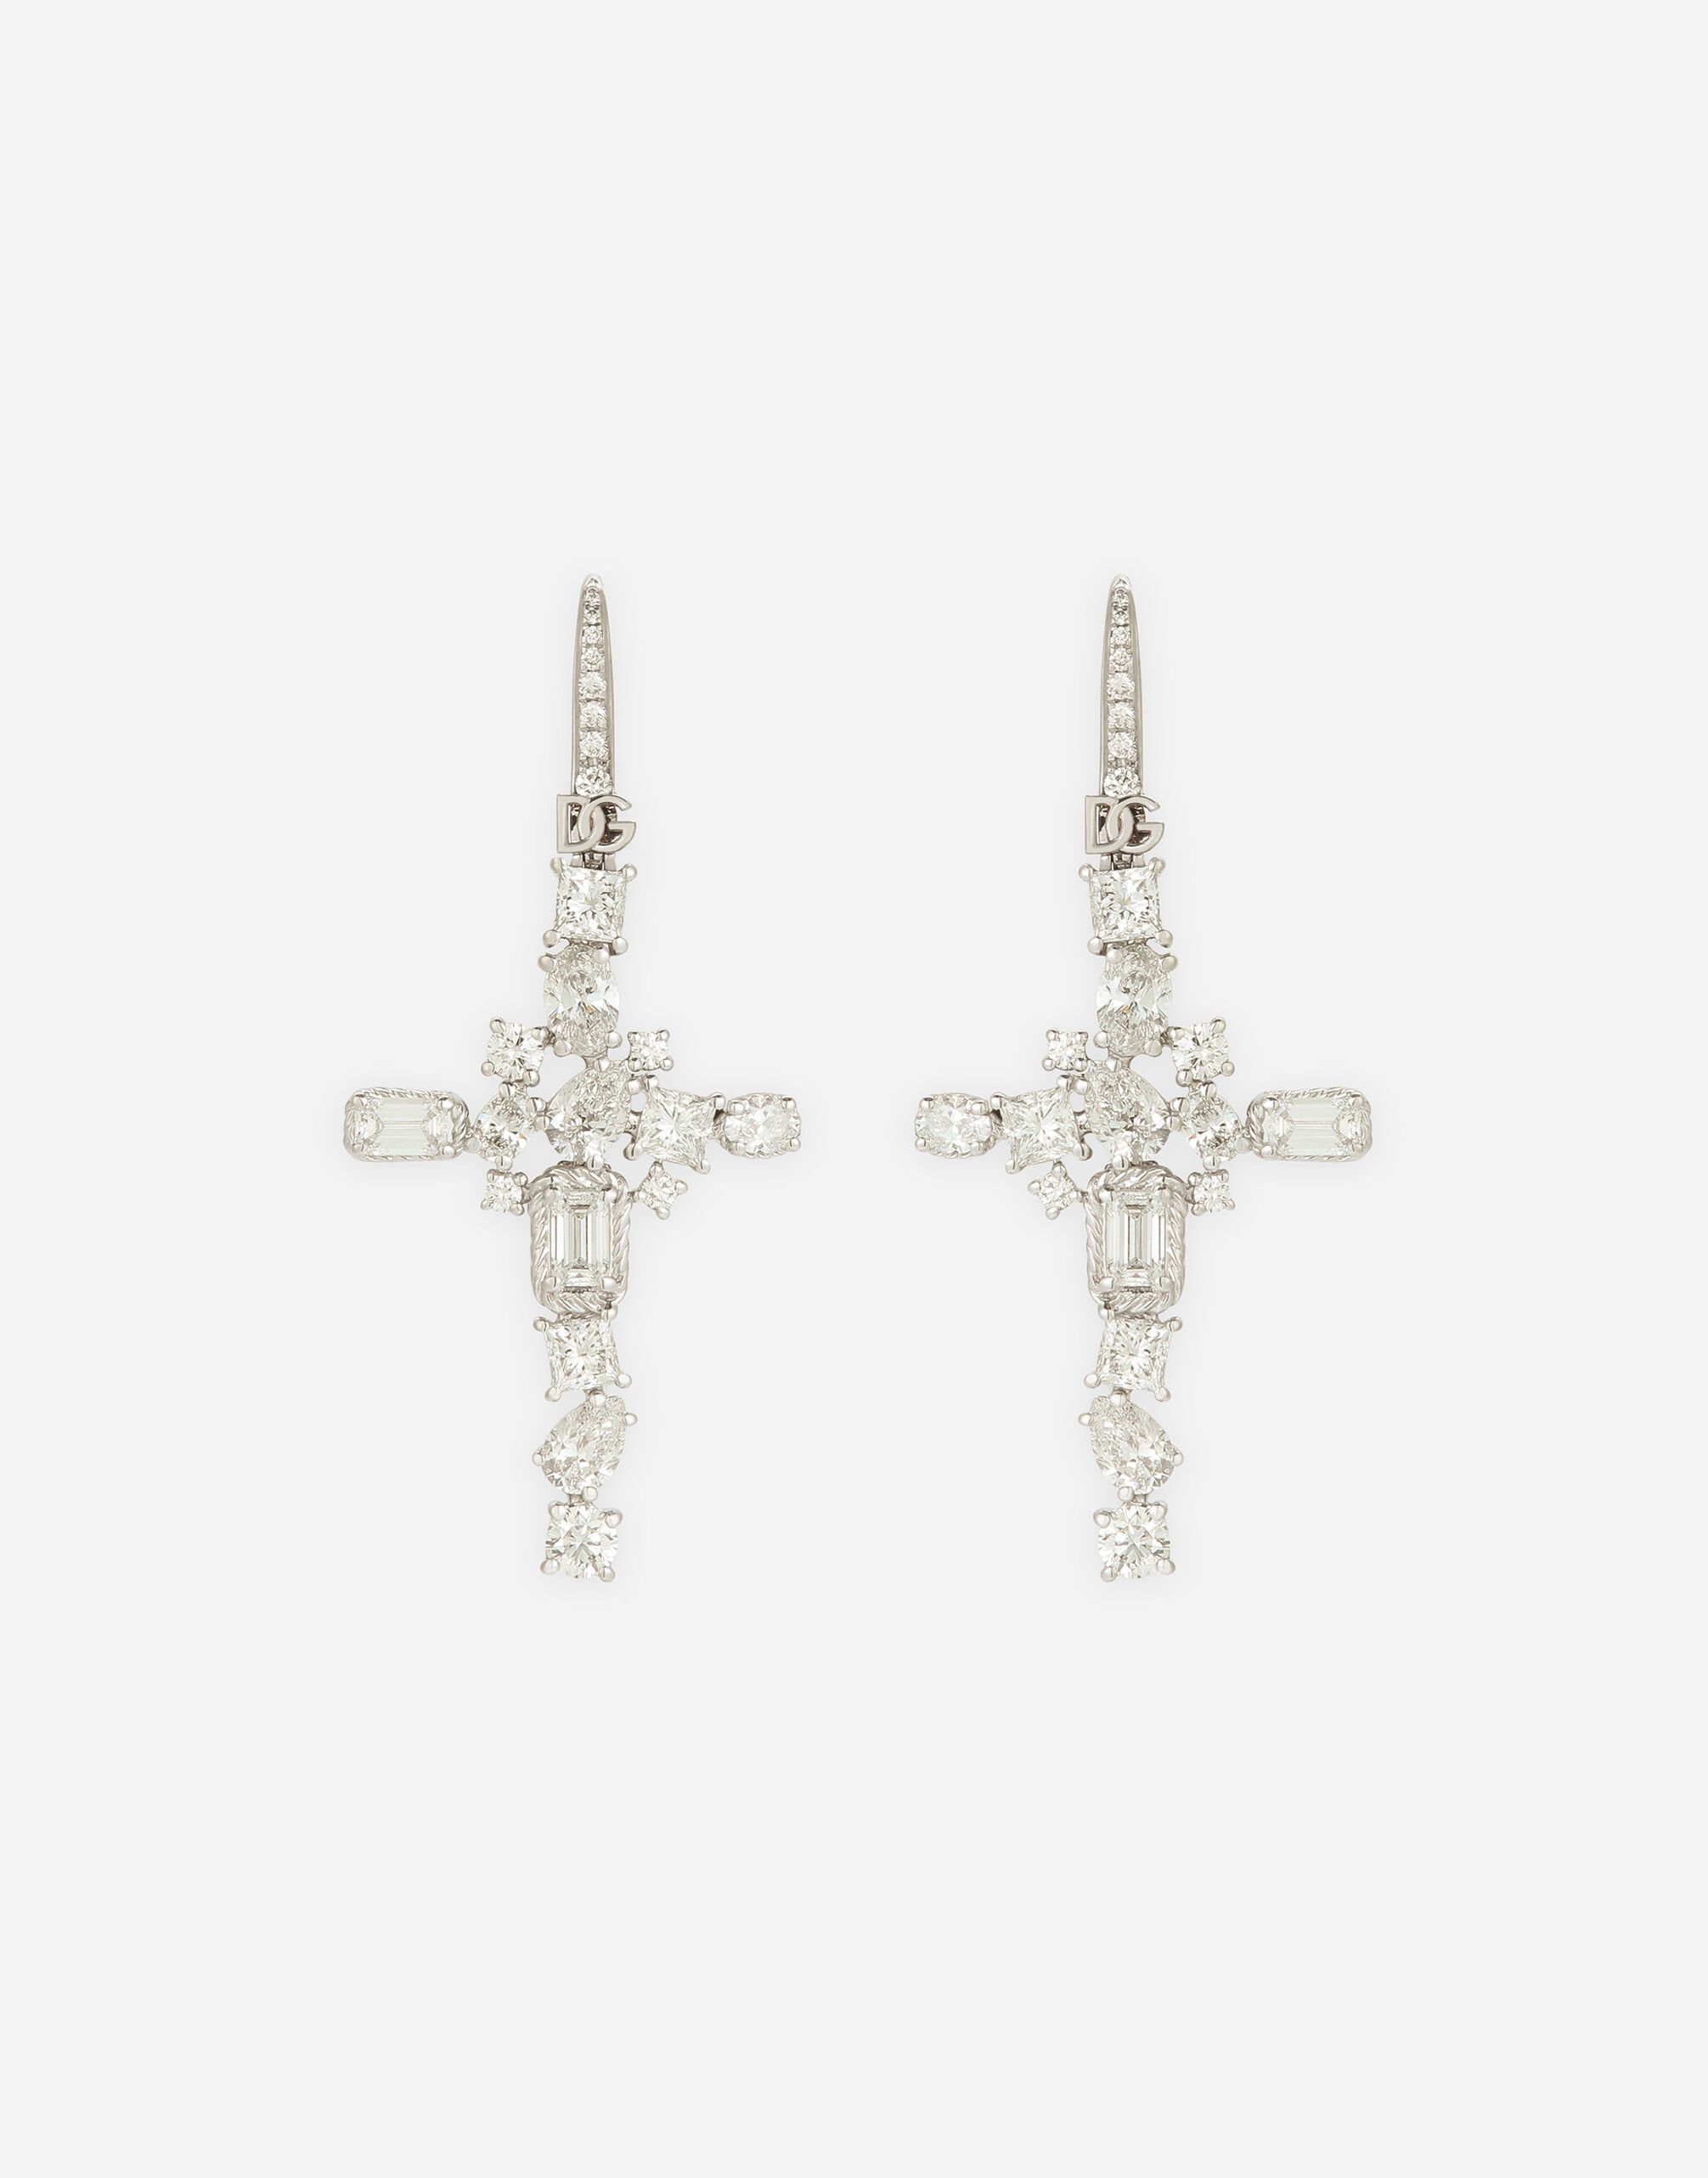 Dolce & Gabbana Easy Diamond earrings in white gold 18Kt diamonds White WSQB1GWSPBL